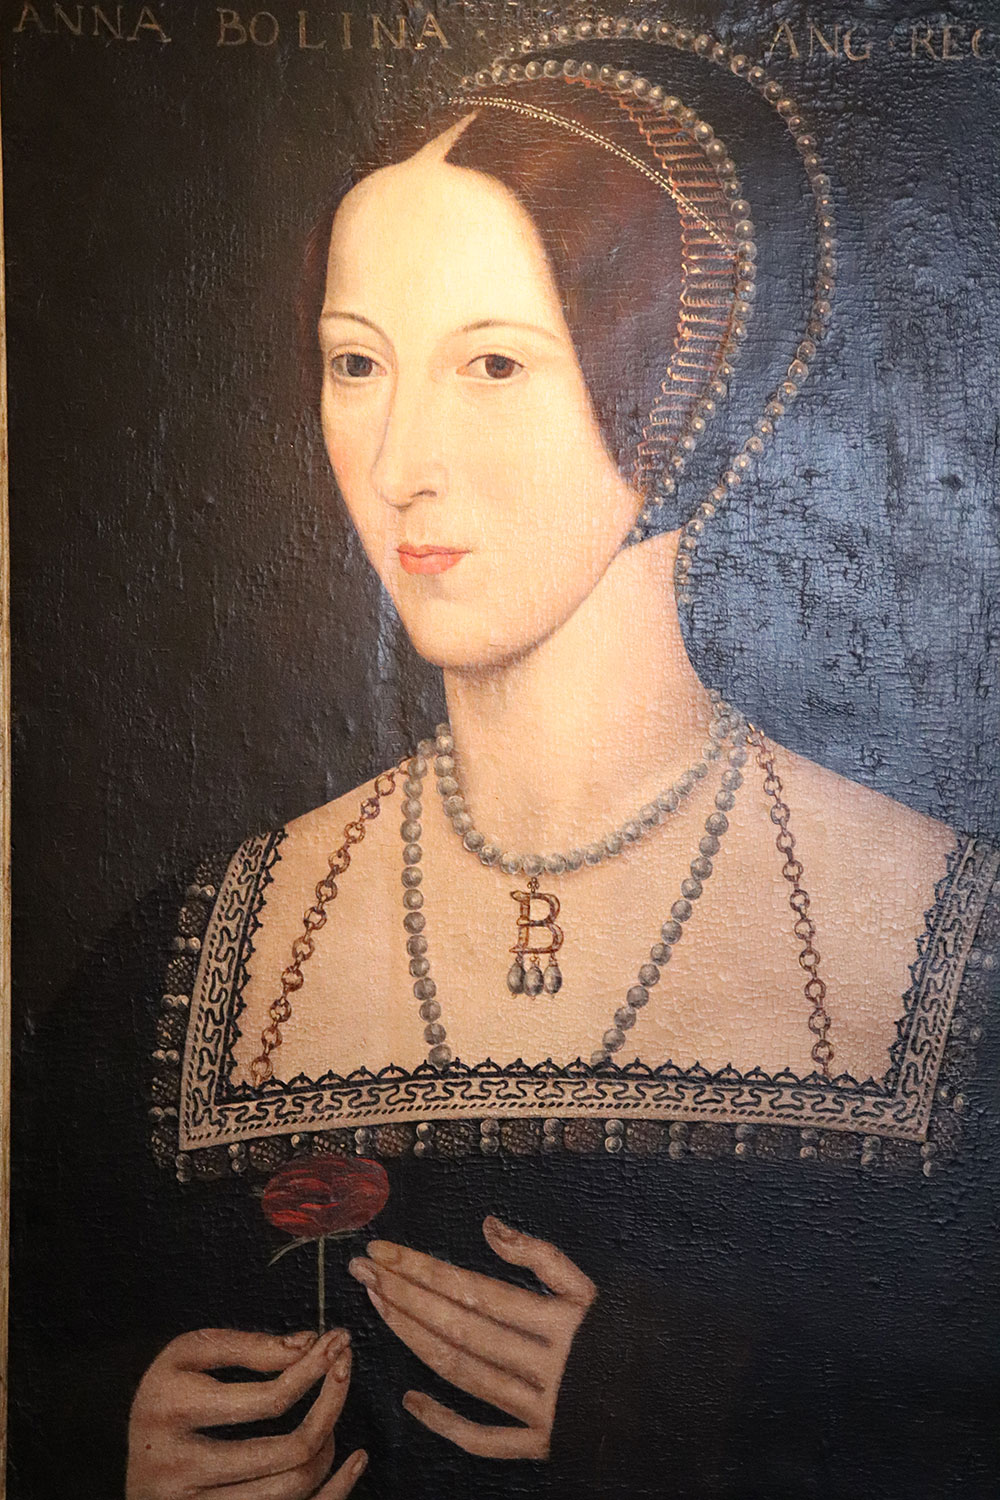 Anne Boleyn at Hever Castle